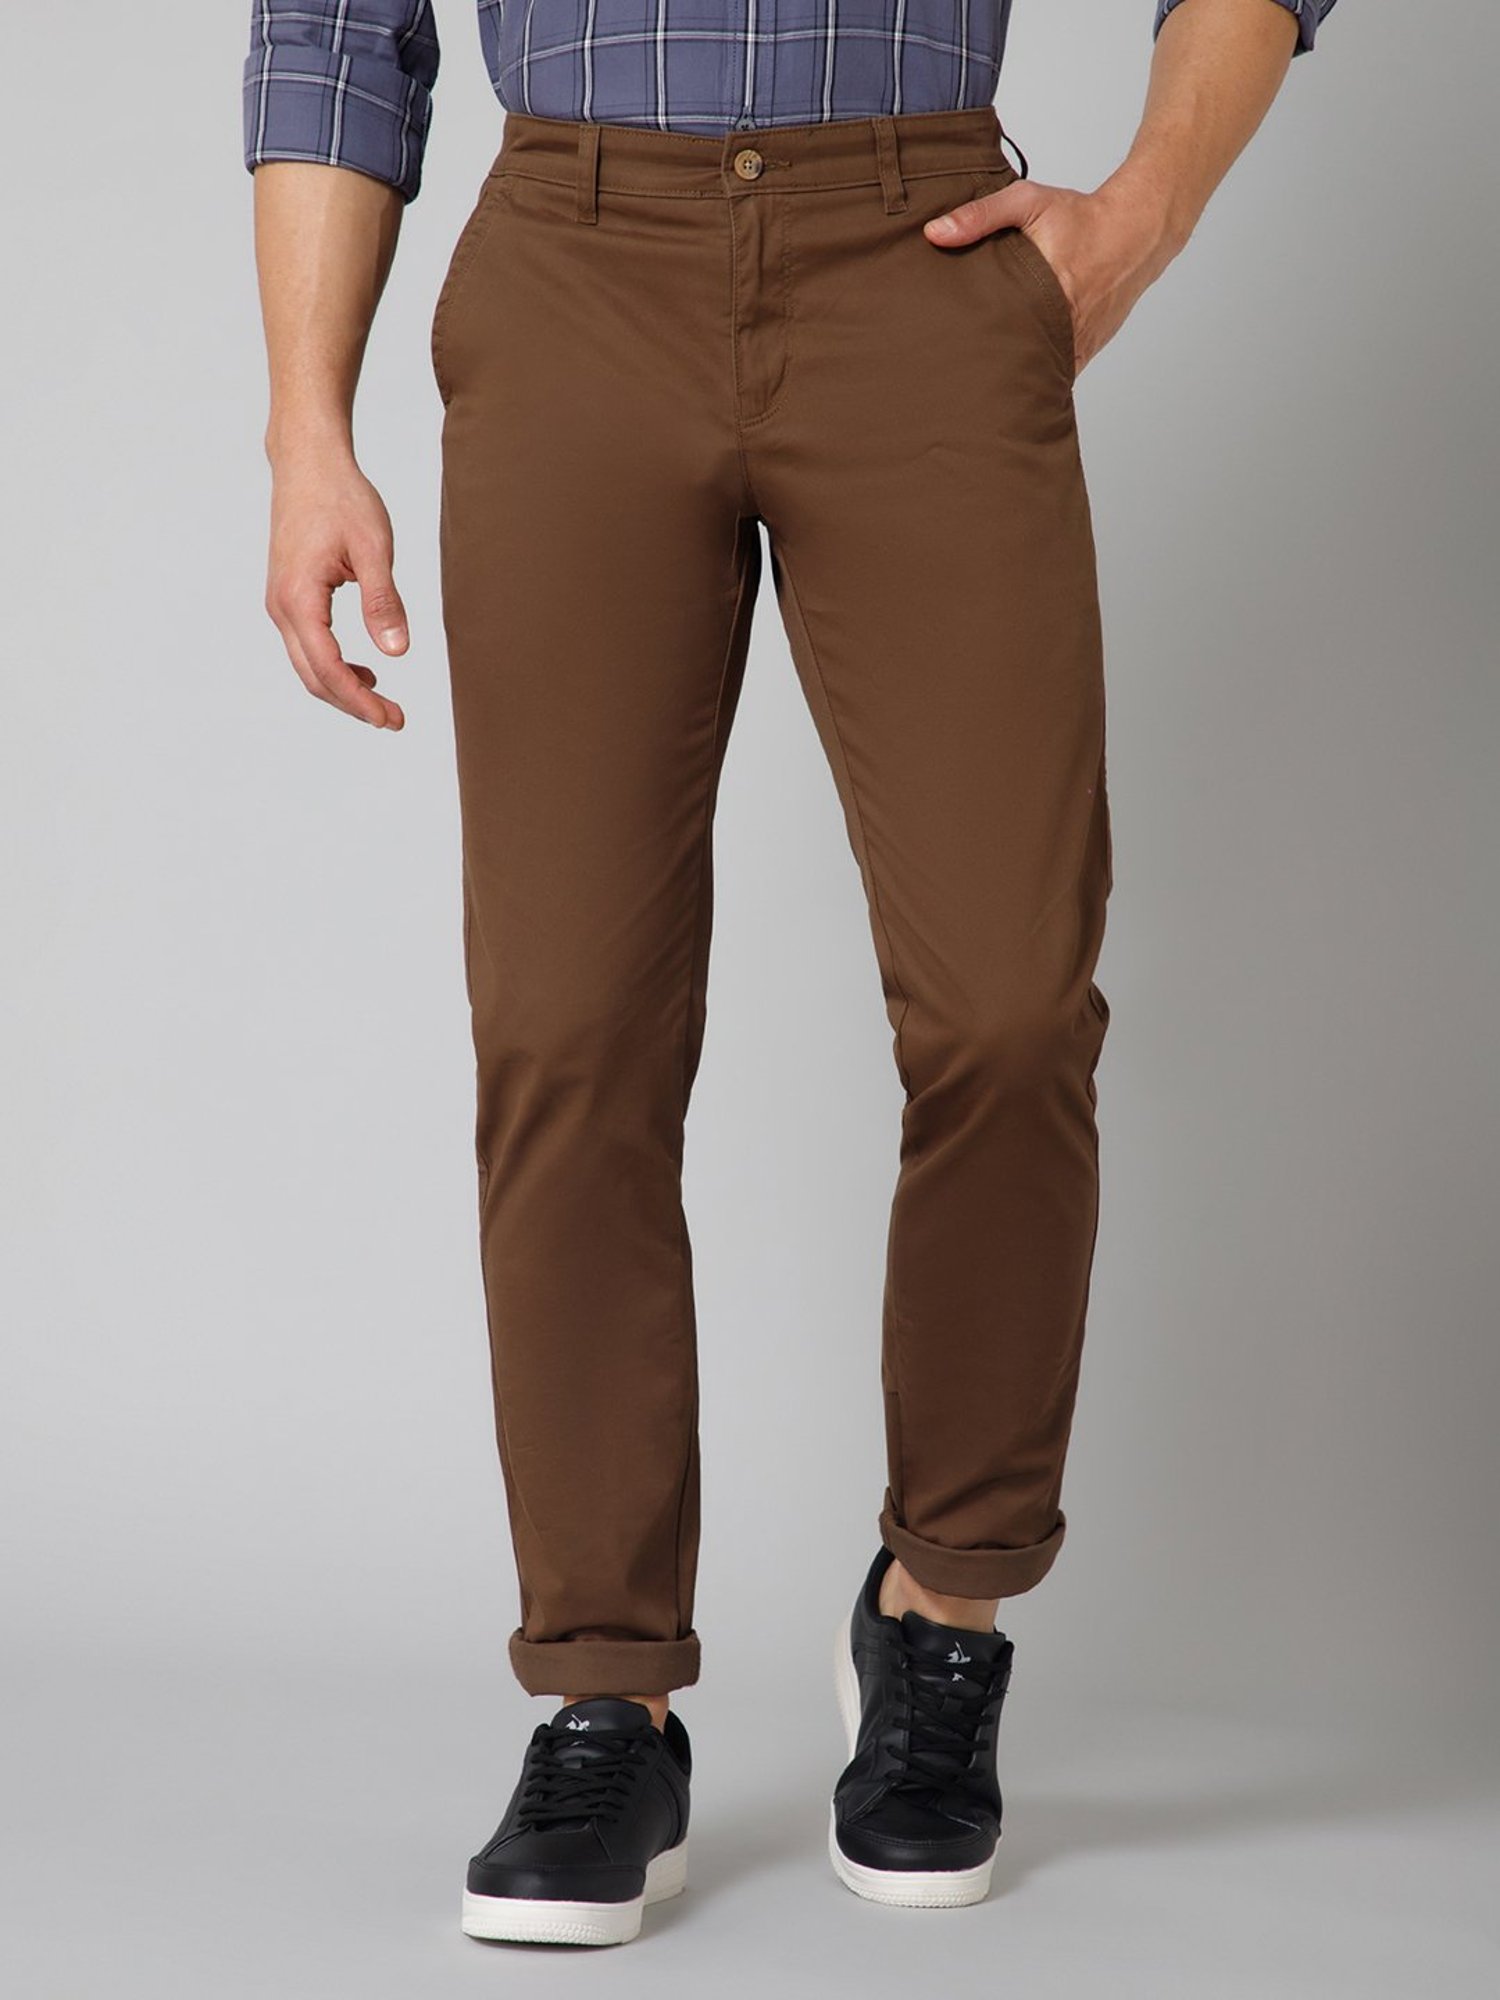 Buy Cantabil Men Khaki Cotton Regular Fit Casual Trouser  (MTRC00099_Khaki_30) at Amazon.in